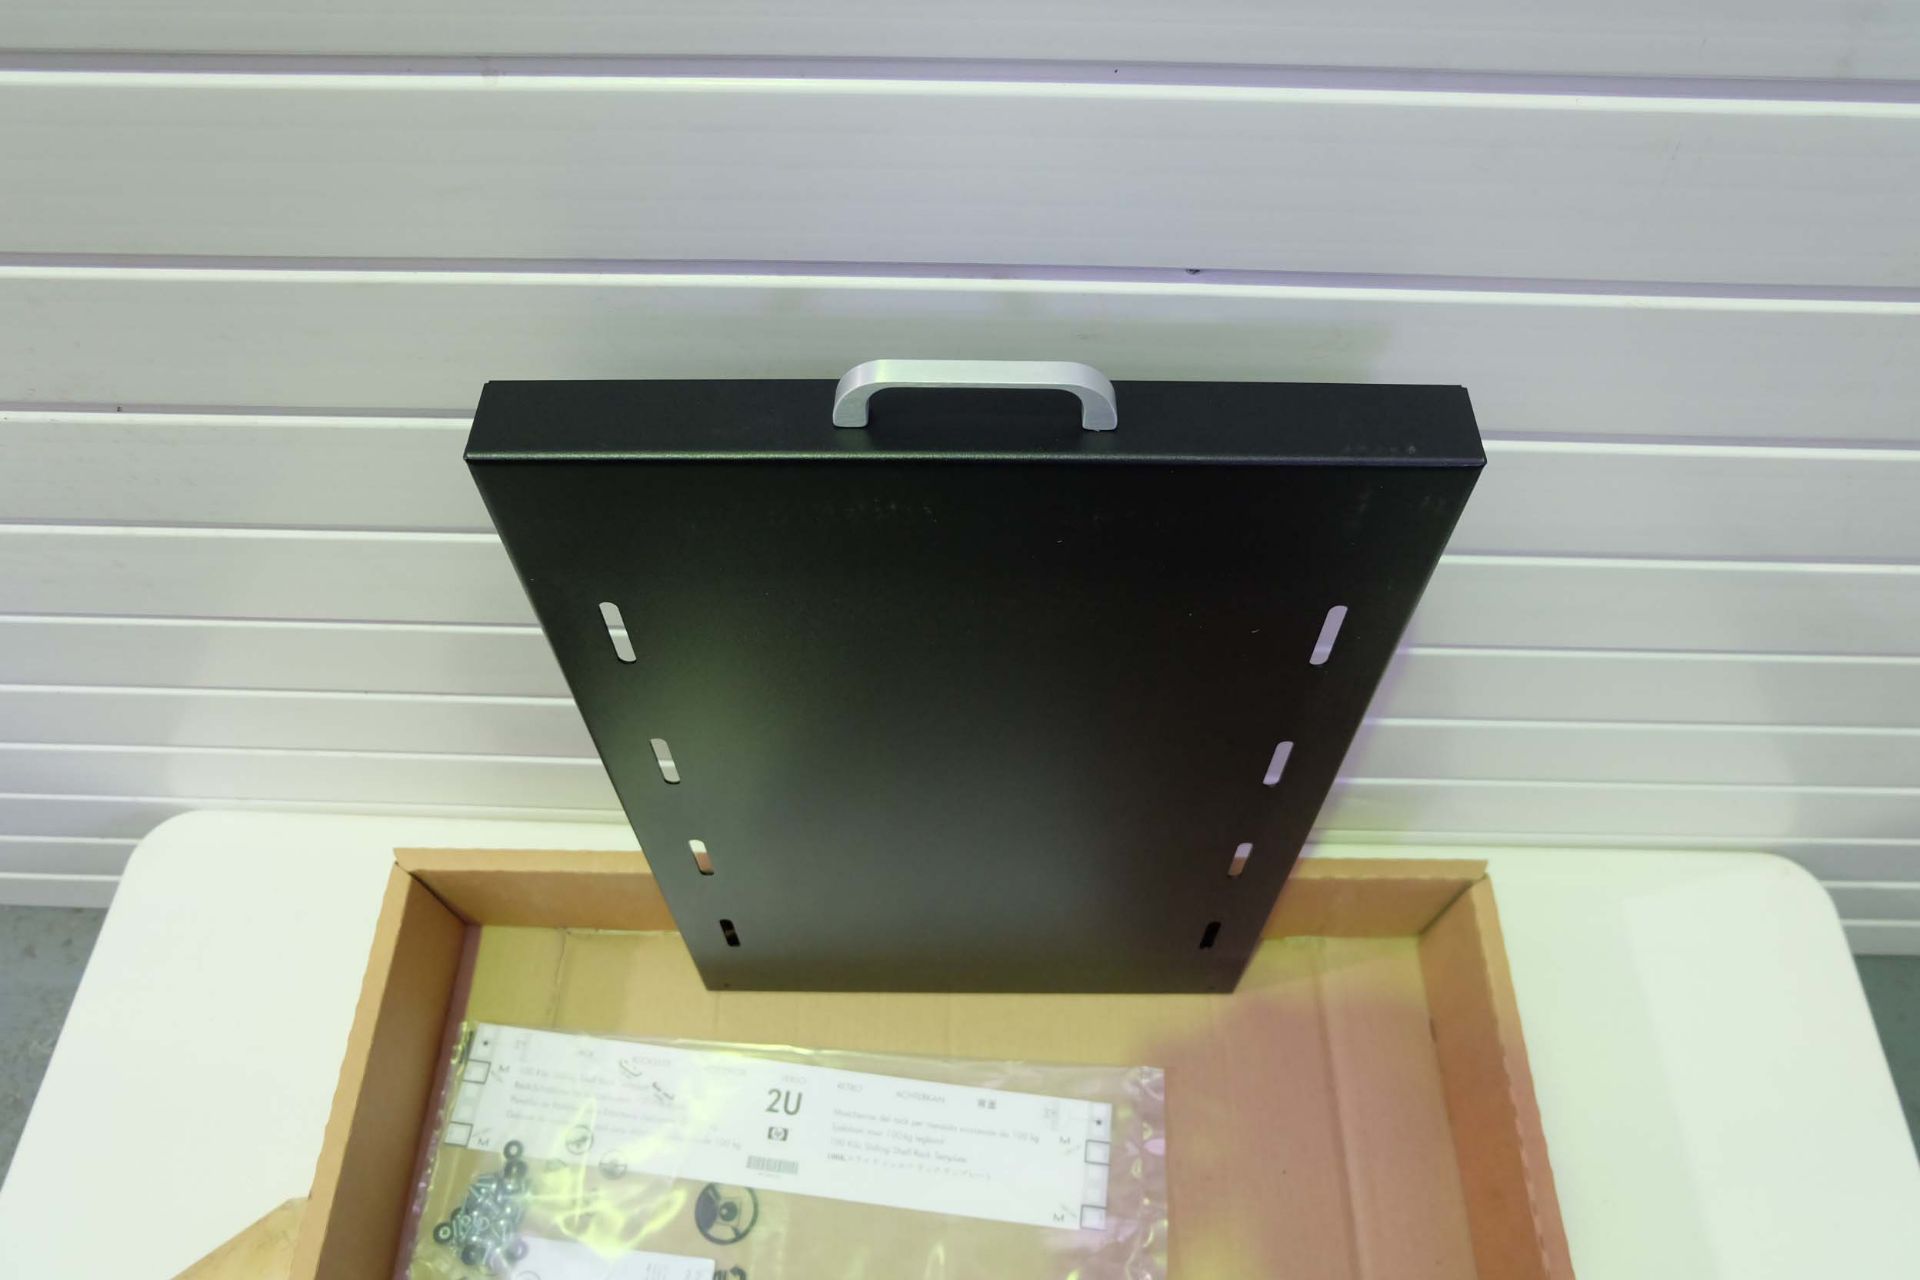 Hewlett Packard 100Kg Sliding Shelf Kit Width 500mm. Length 600mm. As New In Box.